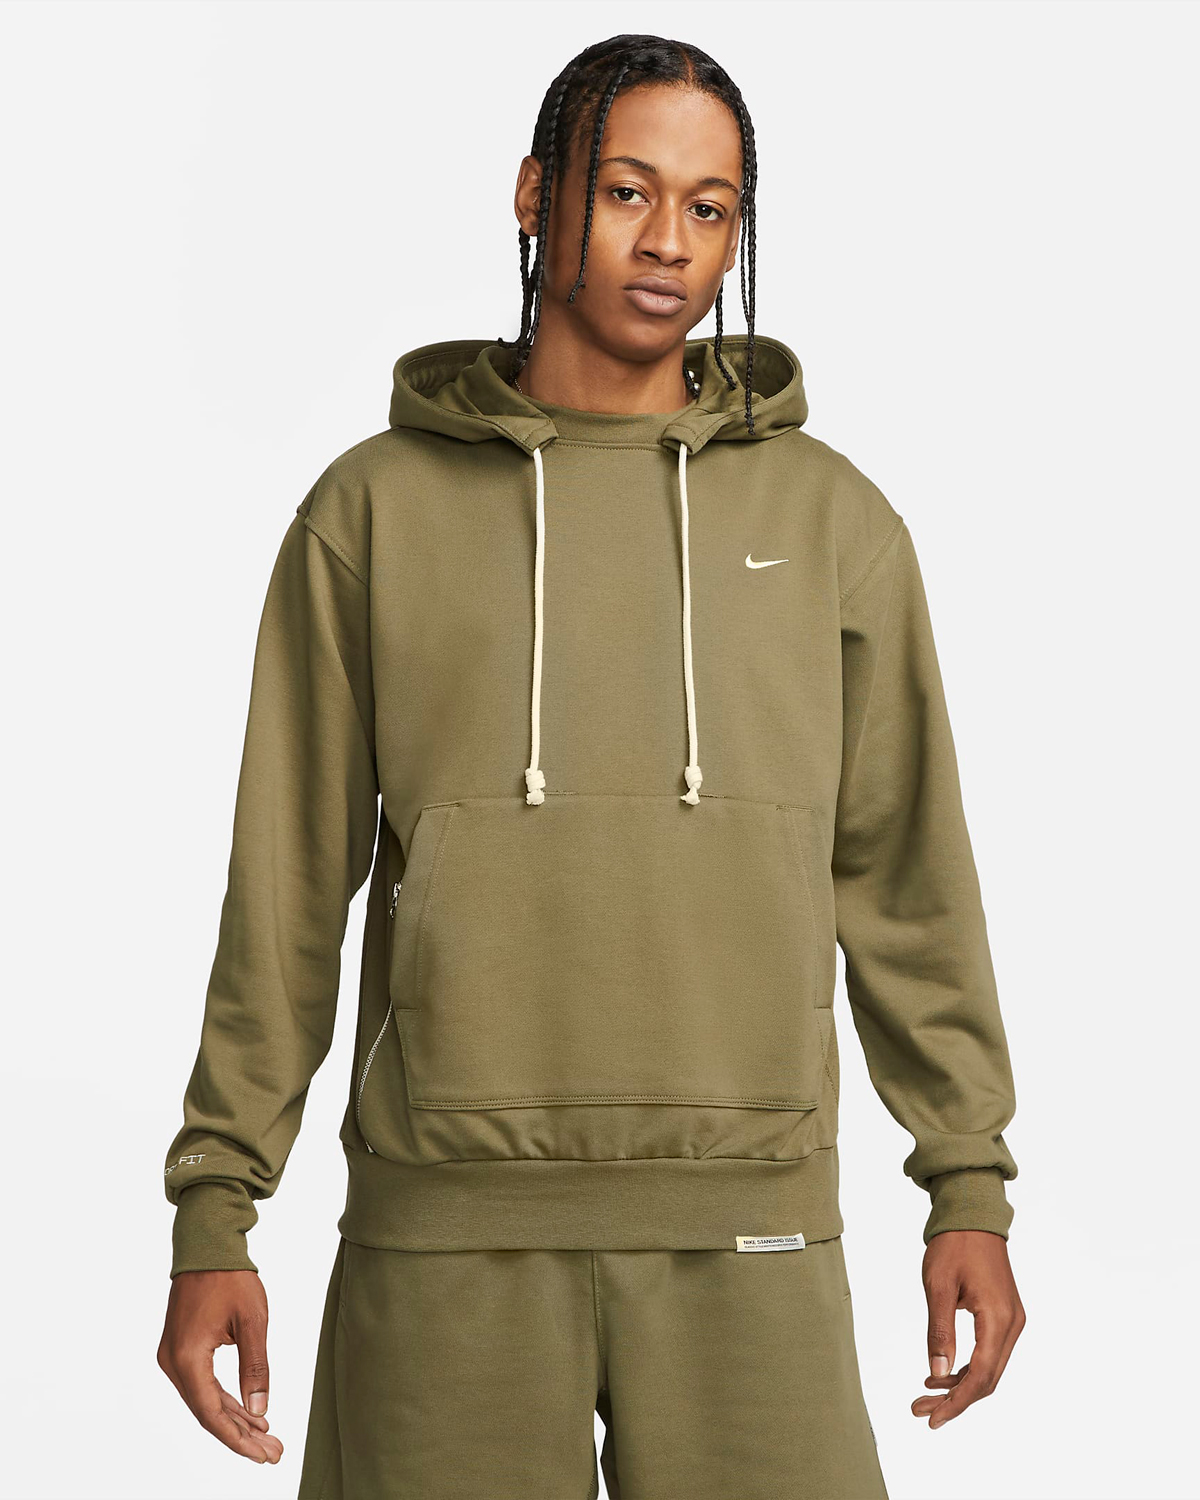 Nike-Standard-Issue-Hoodie-Medium-Olive